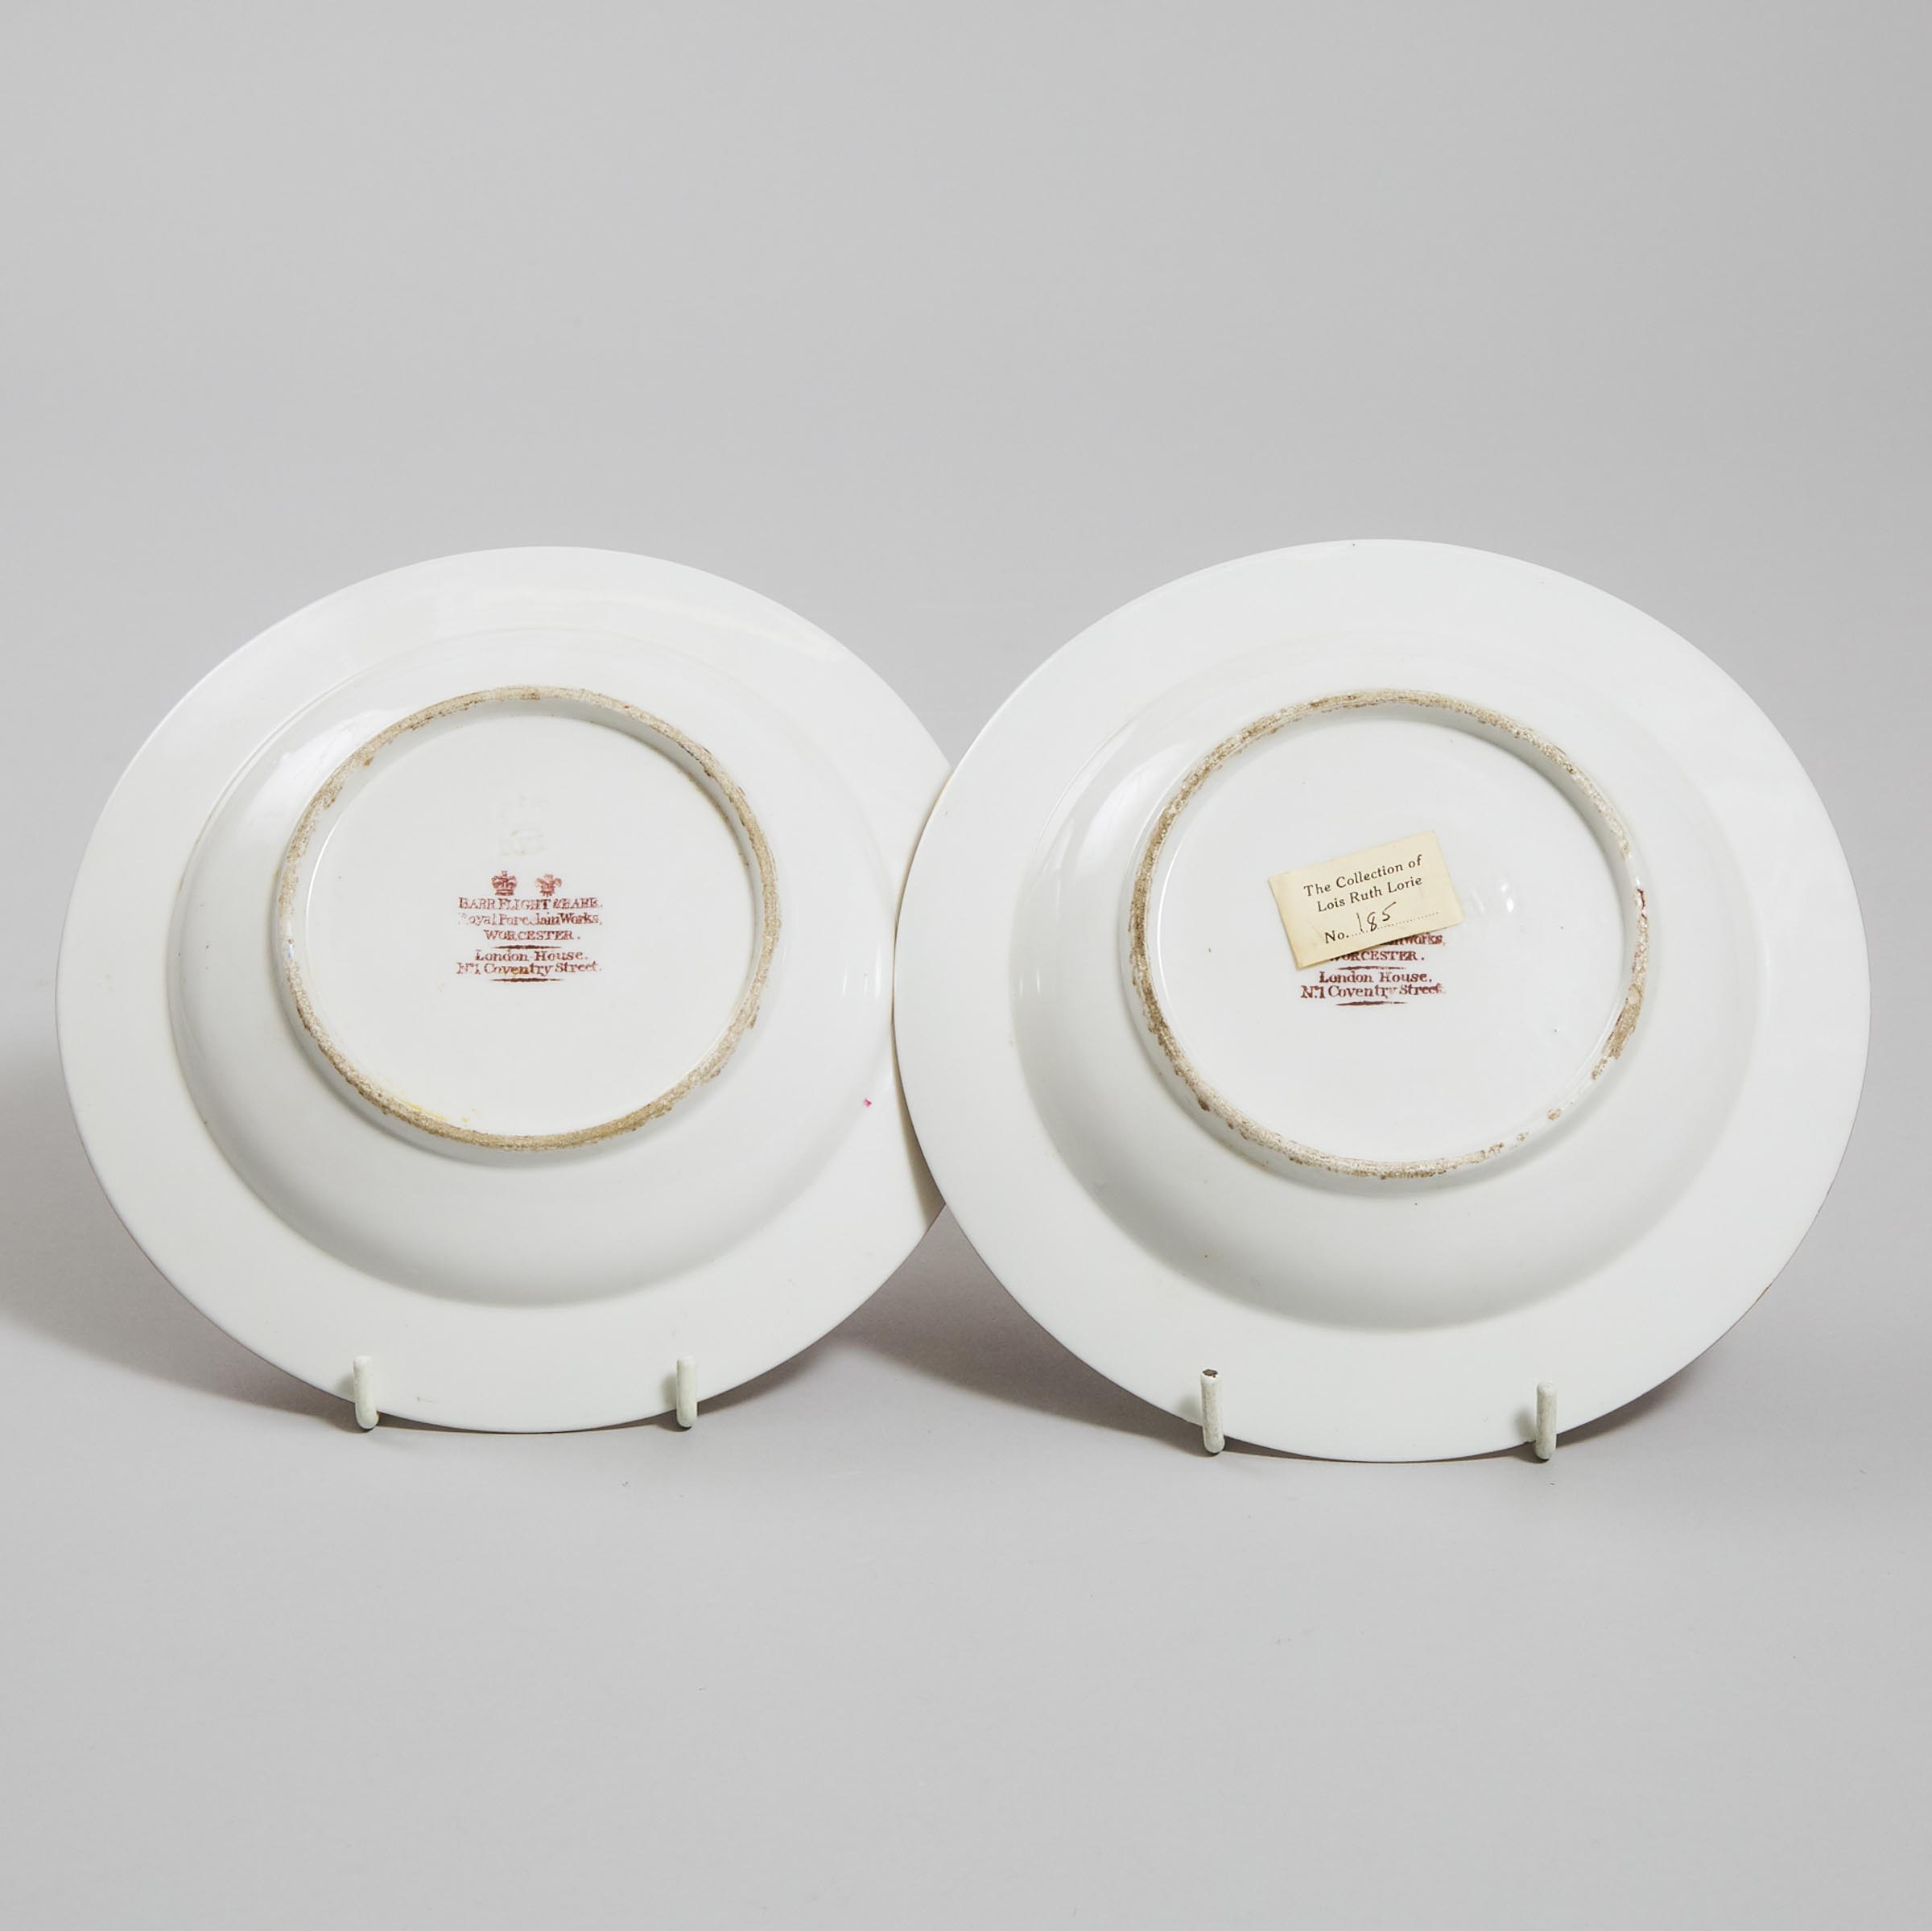 Pair of Barr, Flight & Barr Worcester Japan Pudding Basins, c.1807-13